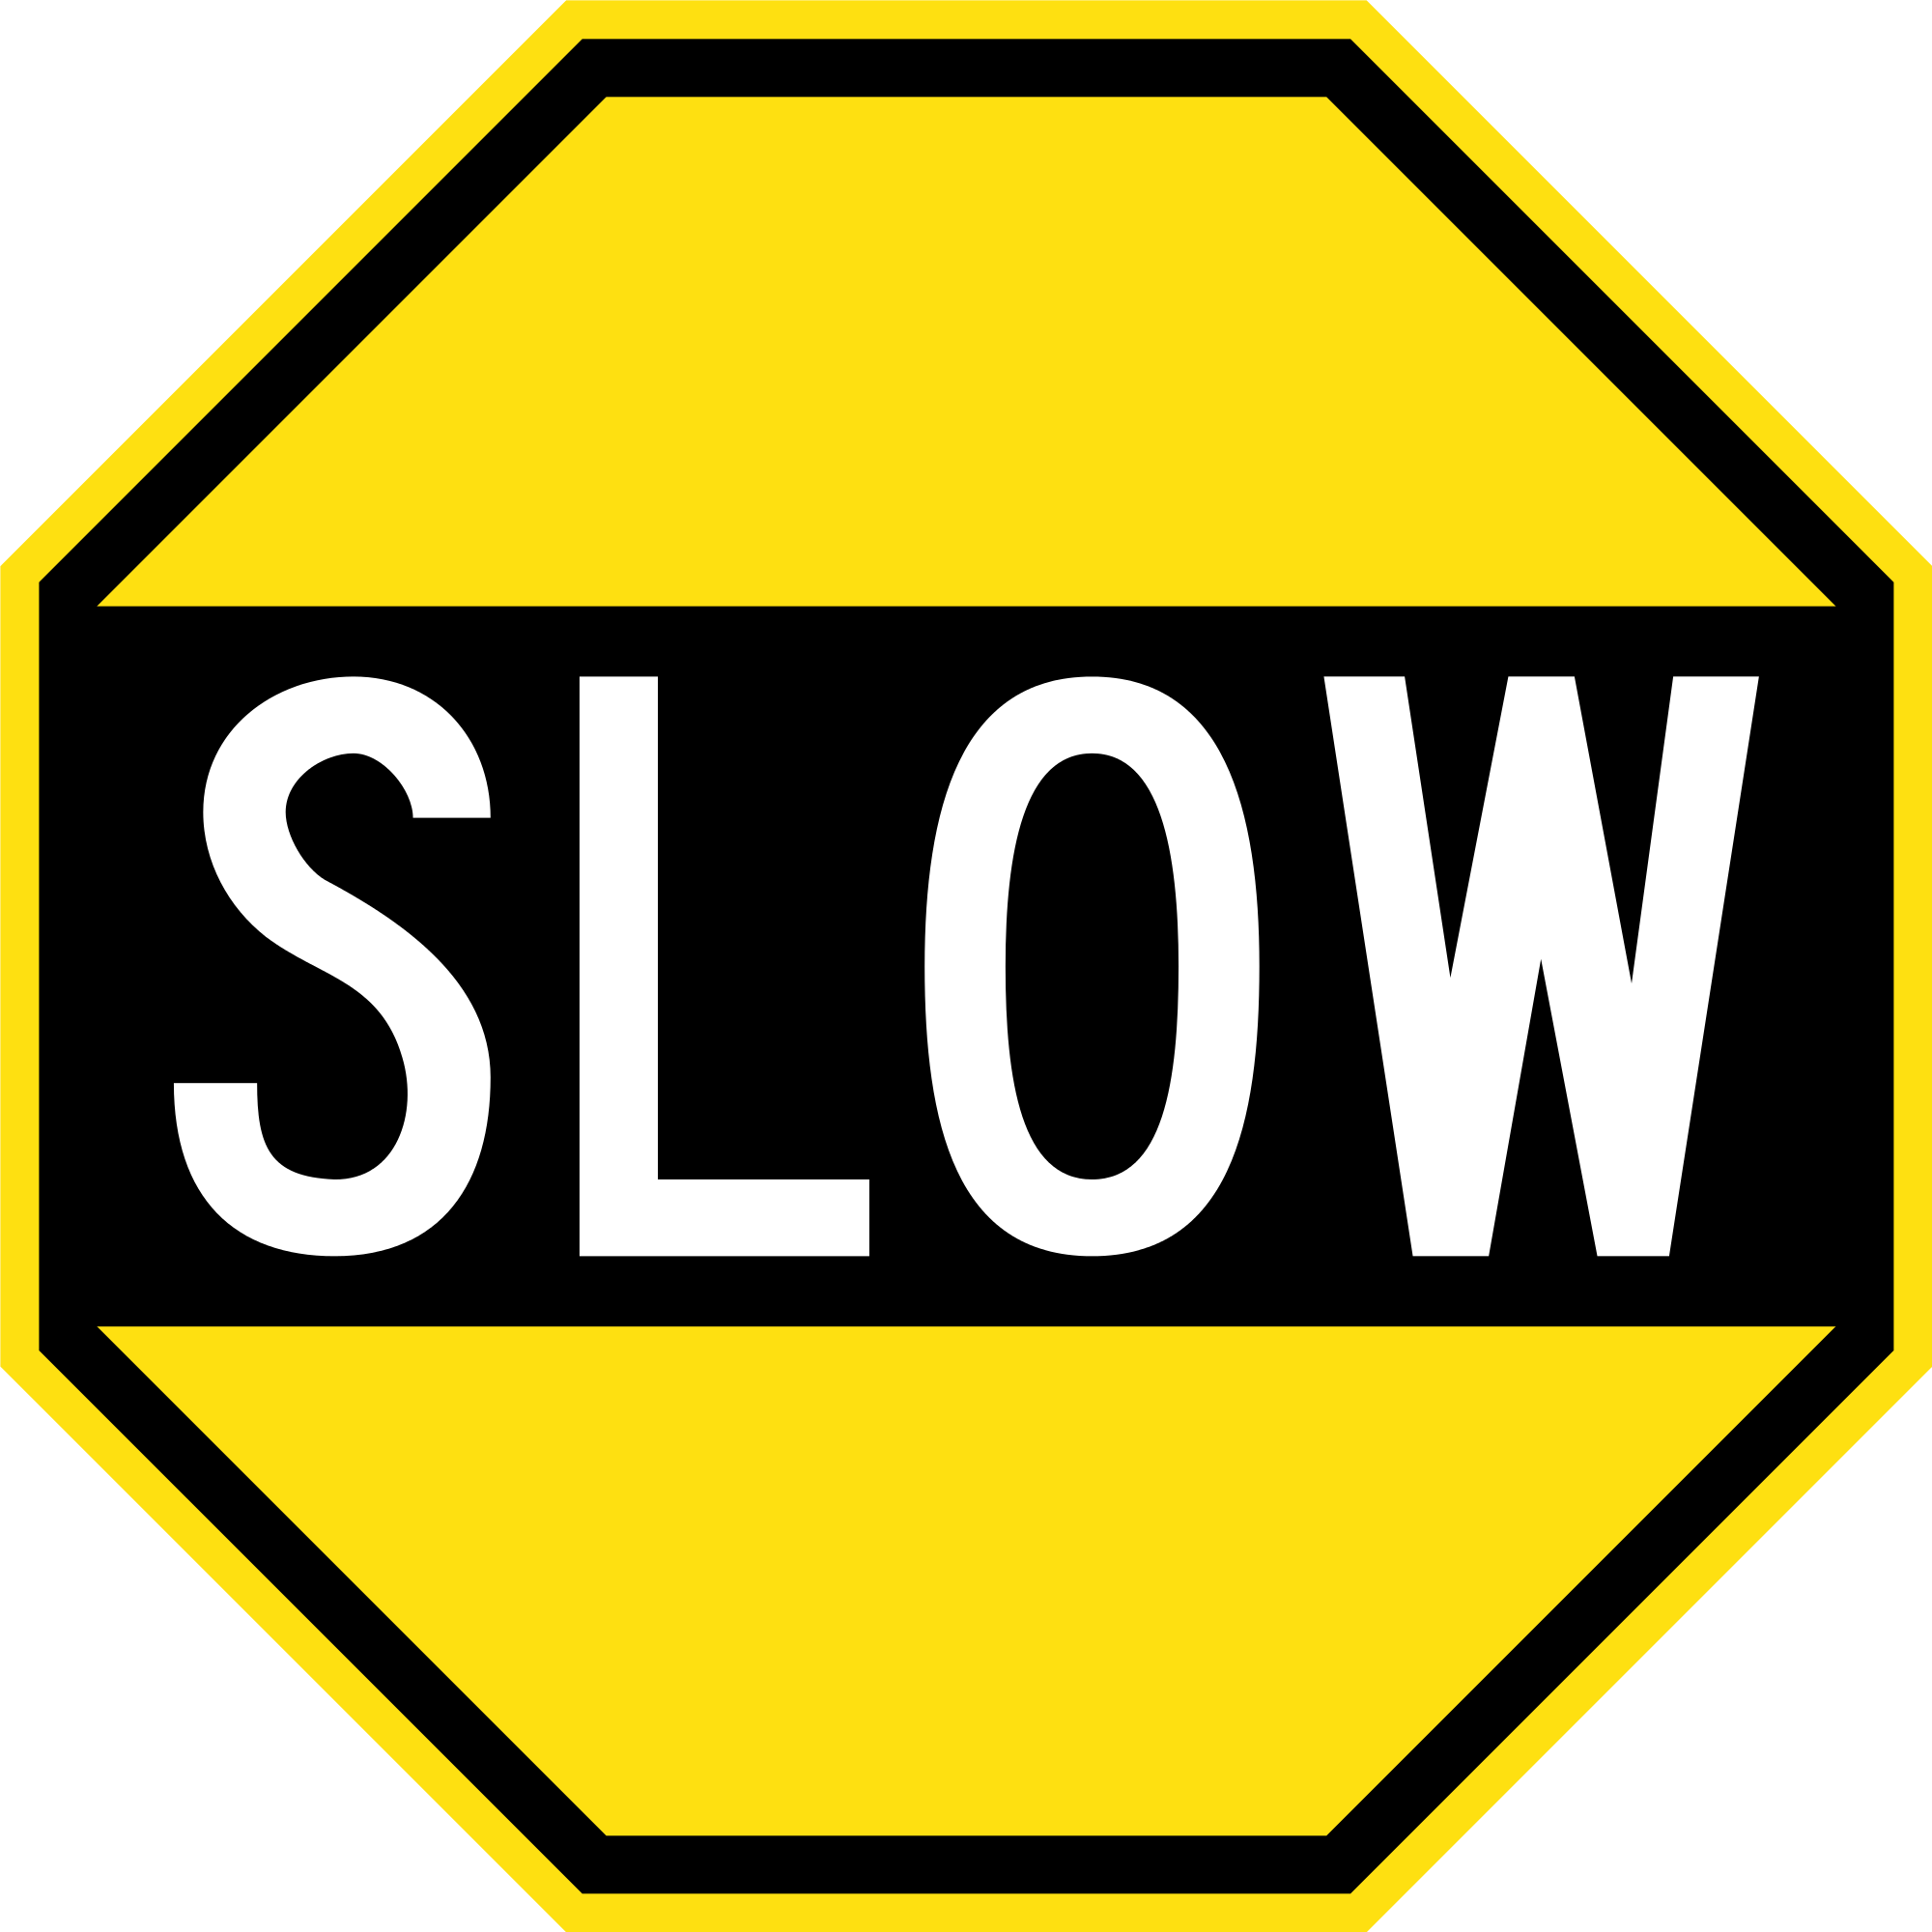 Open - Slow Down Sign Clip Art (2000x2000)